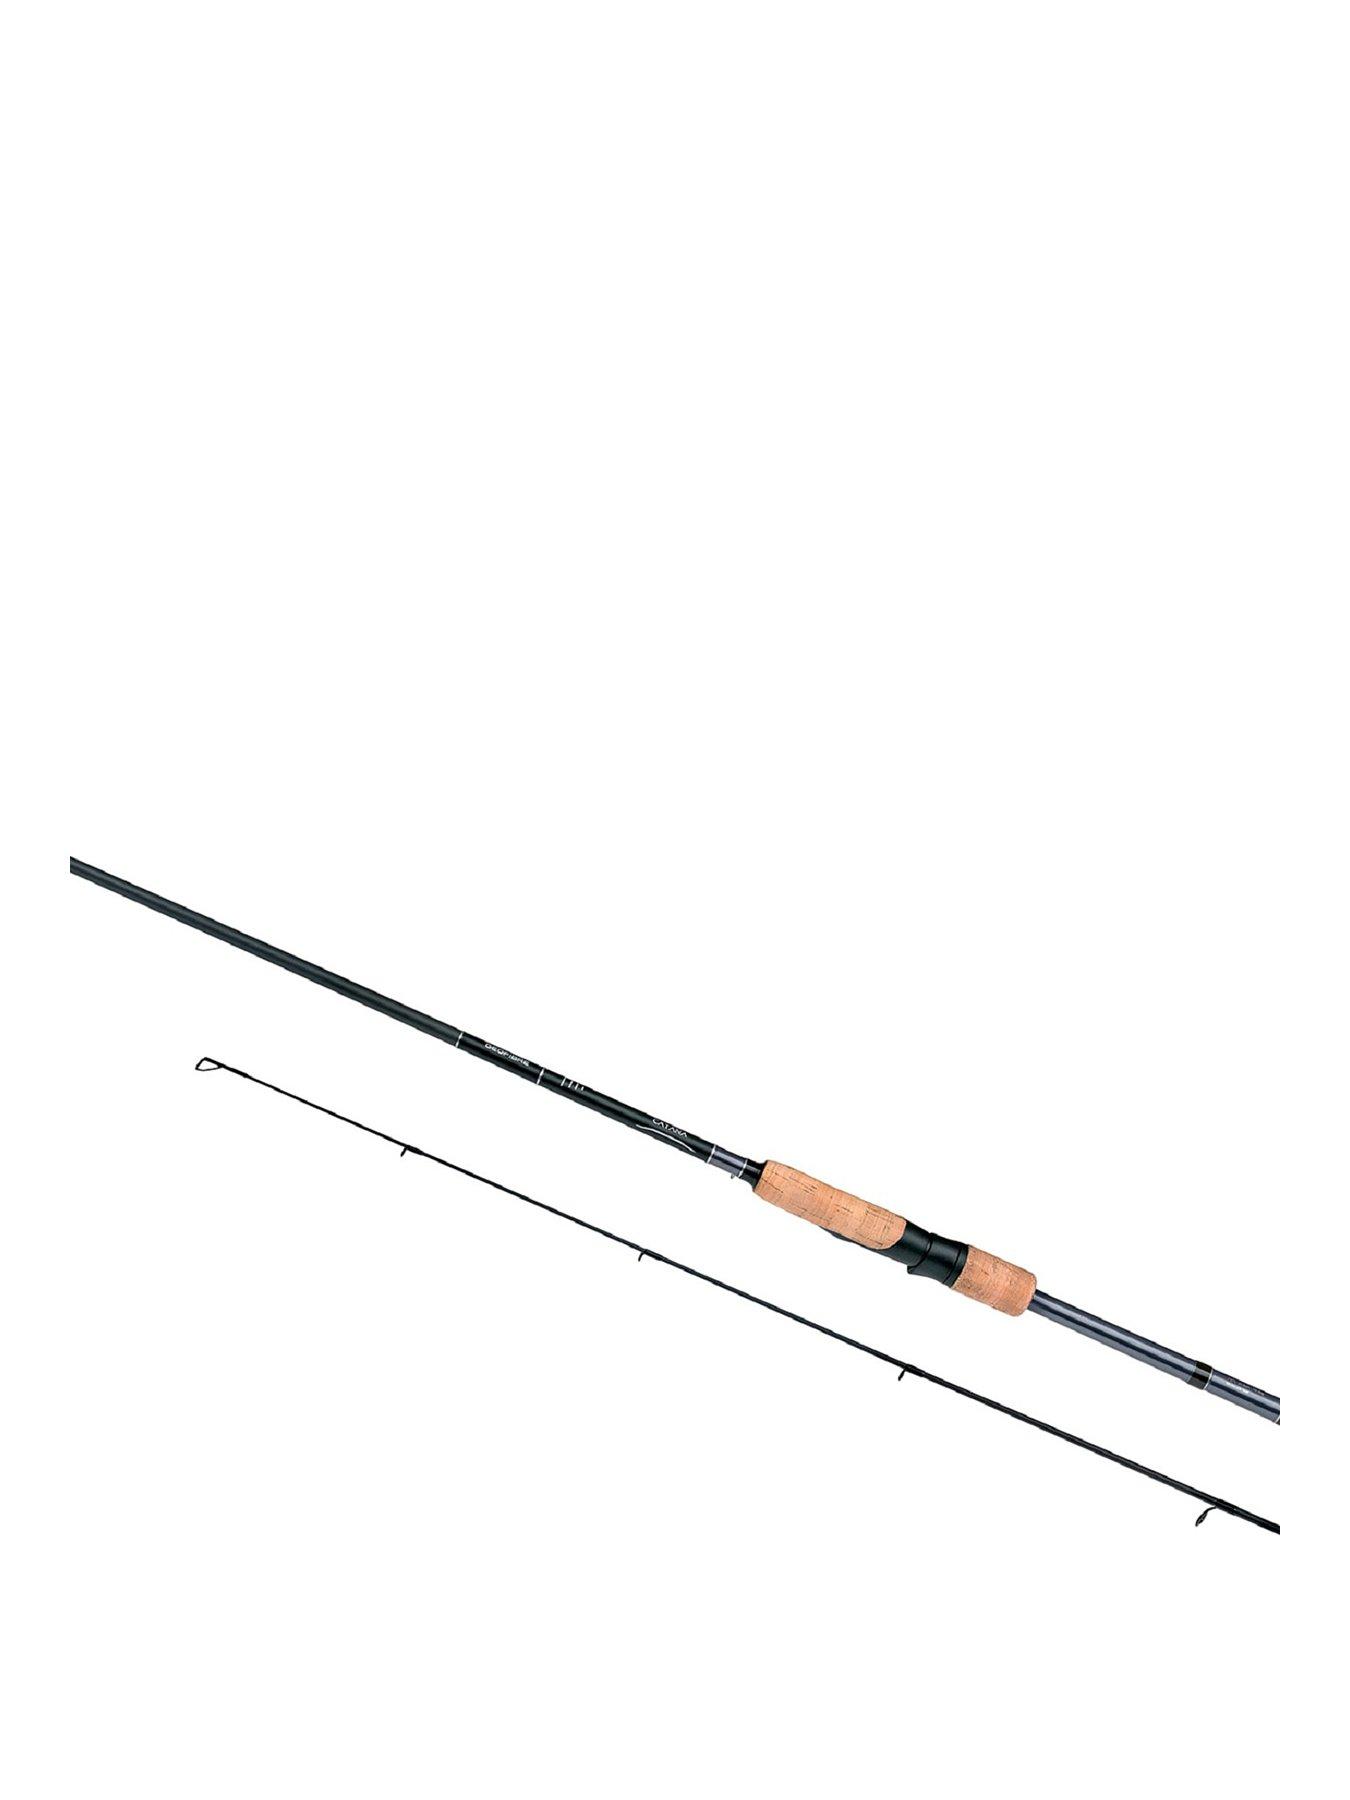 Shimano, Fishing rods & poles, Fishing equipment, Sports & leisure